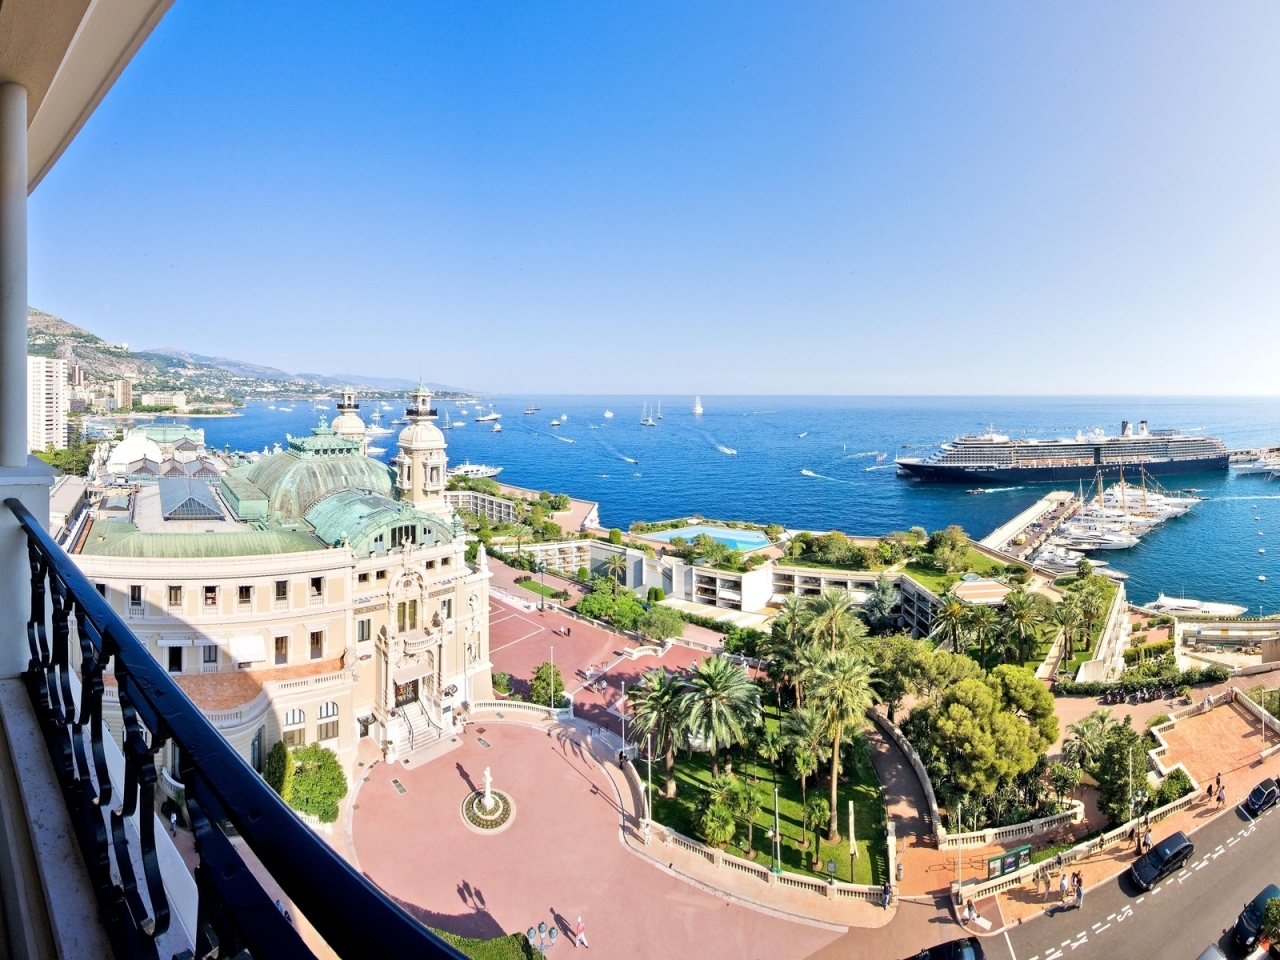 Monaco View for 1280 x 960 resolution